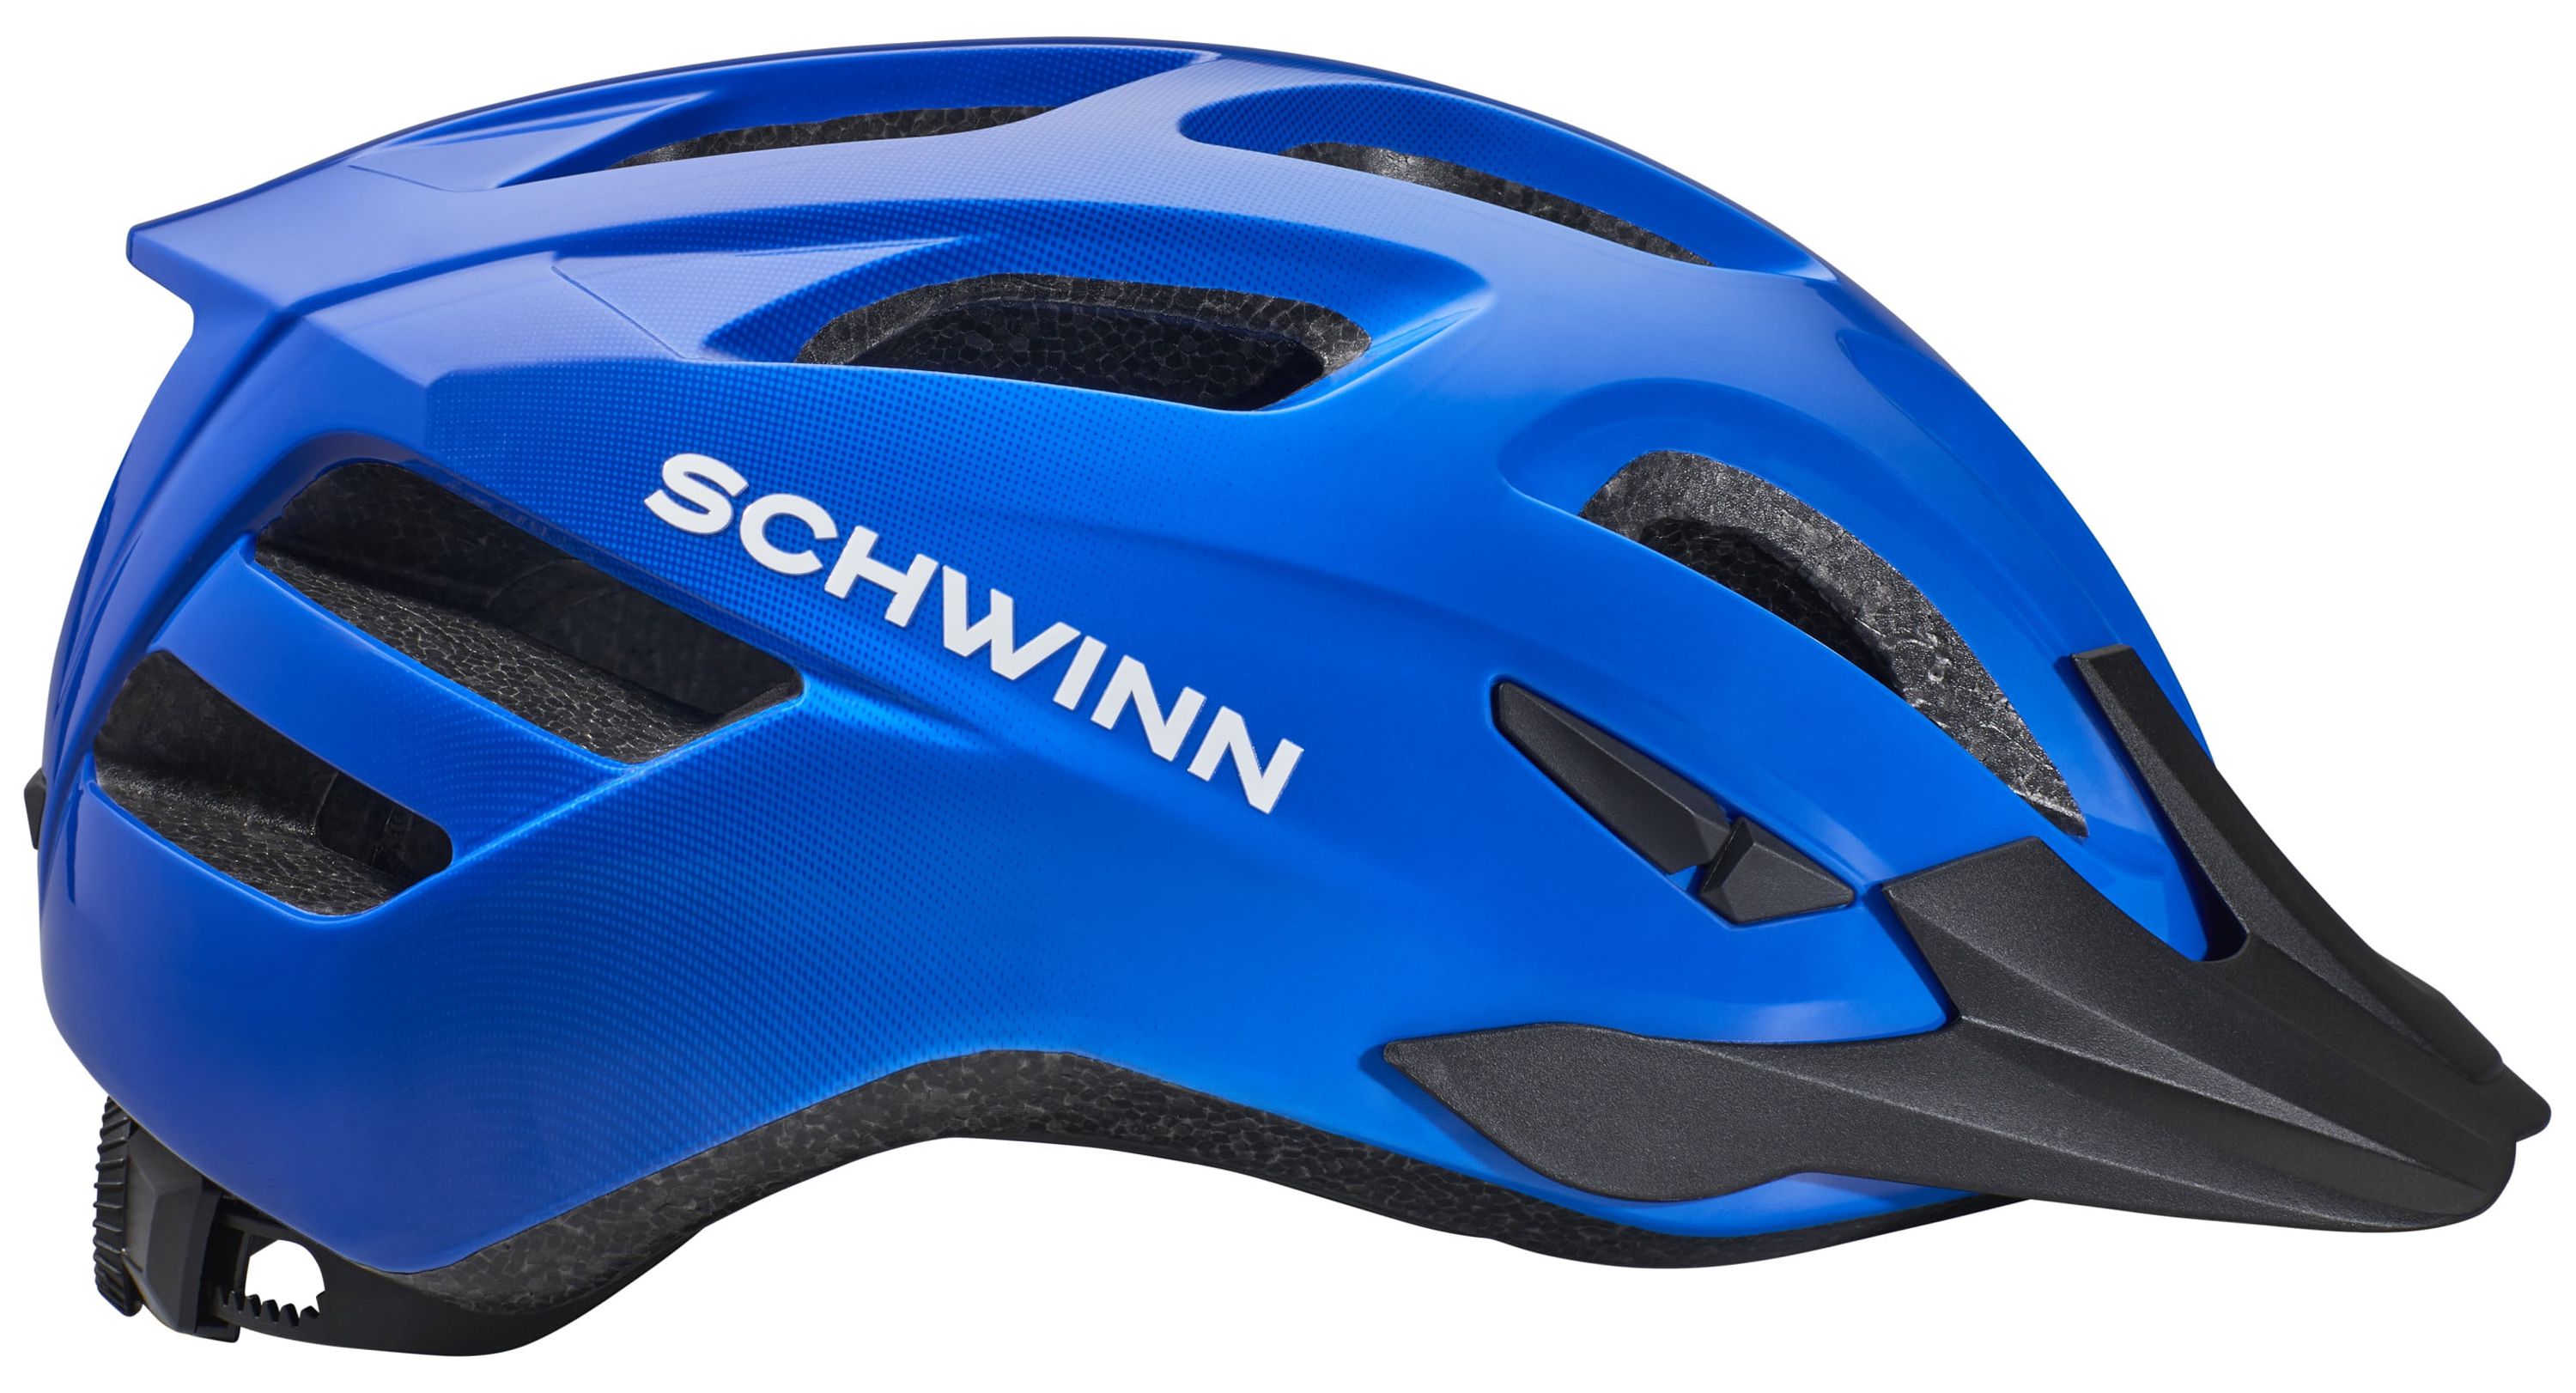 Schwinn Outlook Adult Helmet, Ages 14+, Blue - image 4 of 6